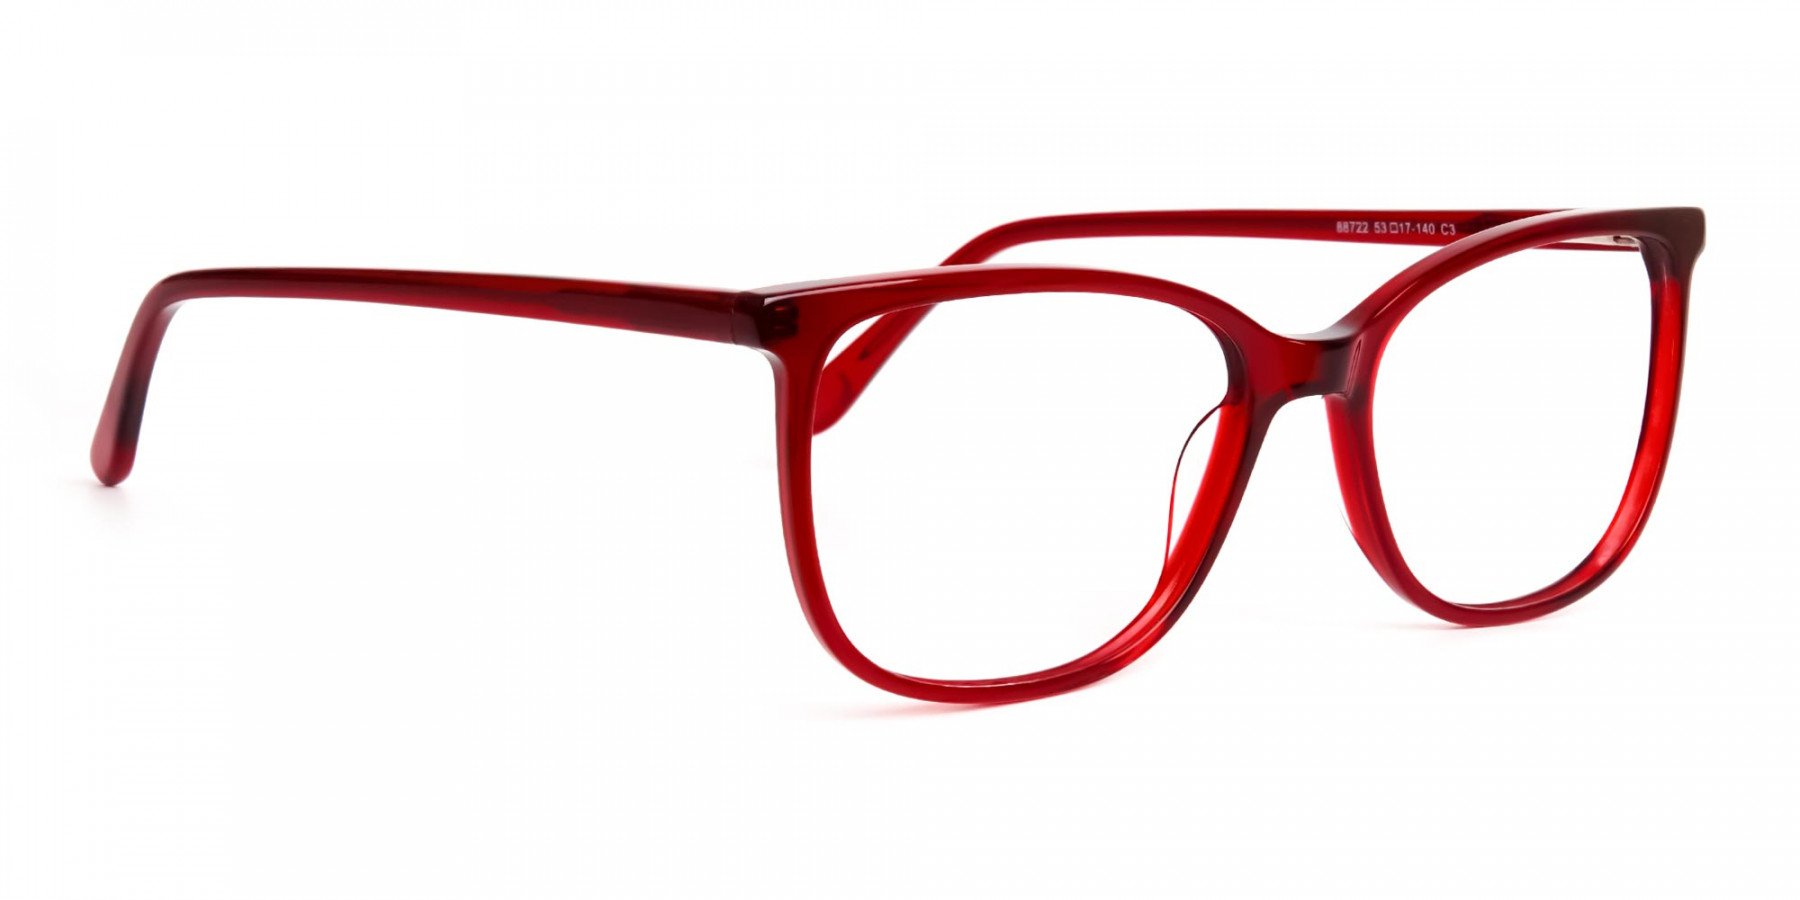 dark-and-red-wayfarer-cateye-glasses-glasses-frames-1